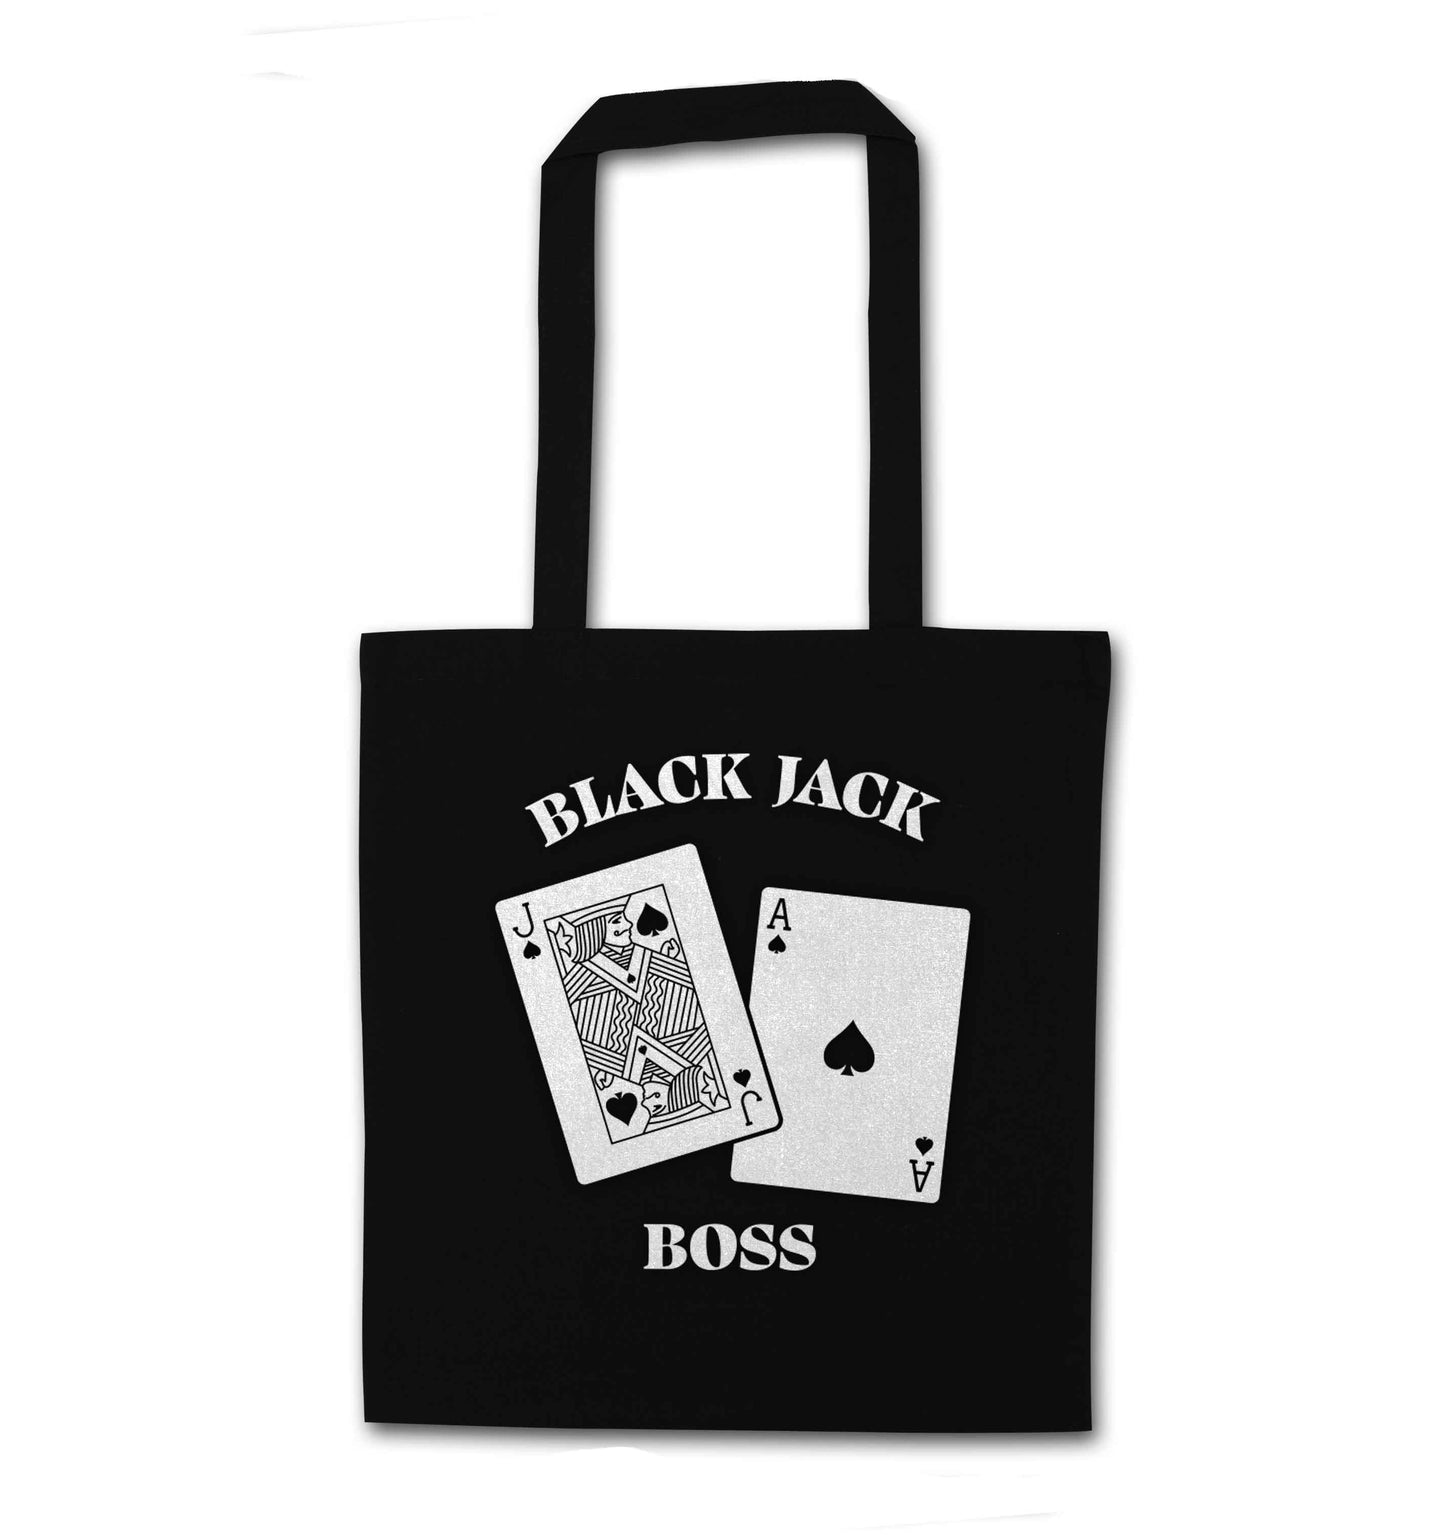 Blackjack boss black tote bag